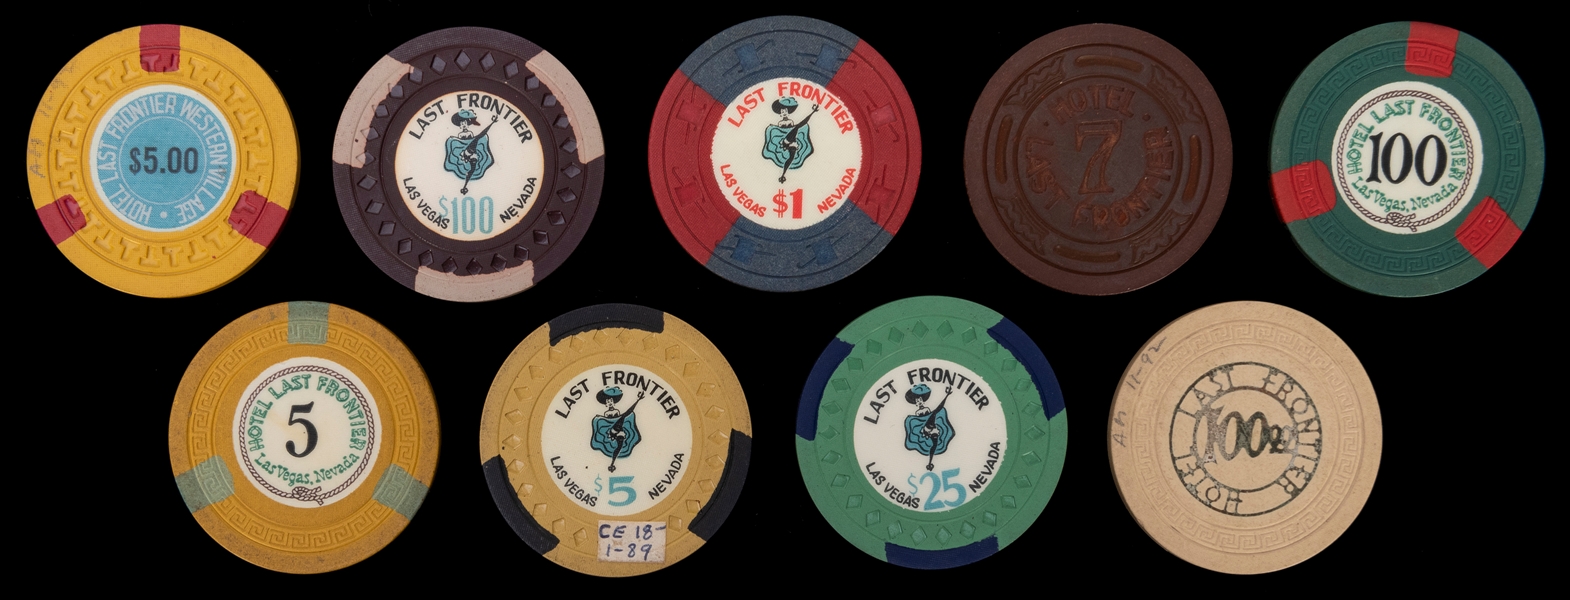  Last Frontier Casino Las Vegas Chips Lot. Nine chips, inclu...